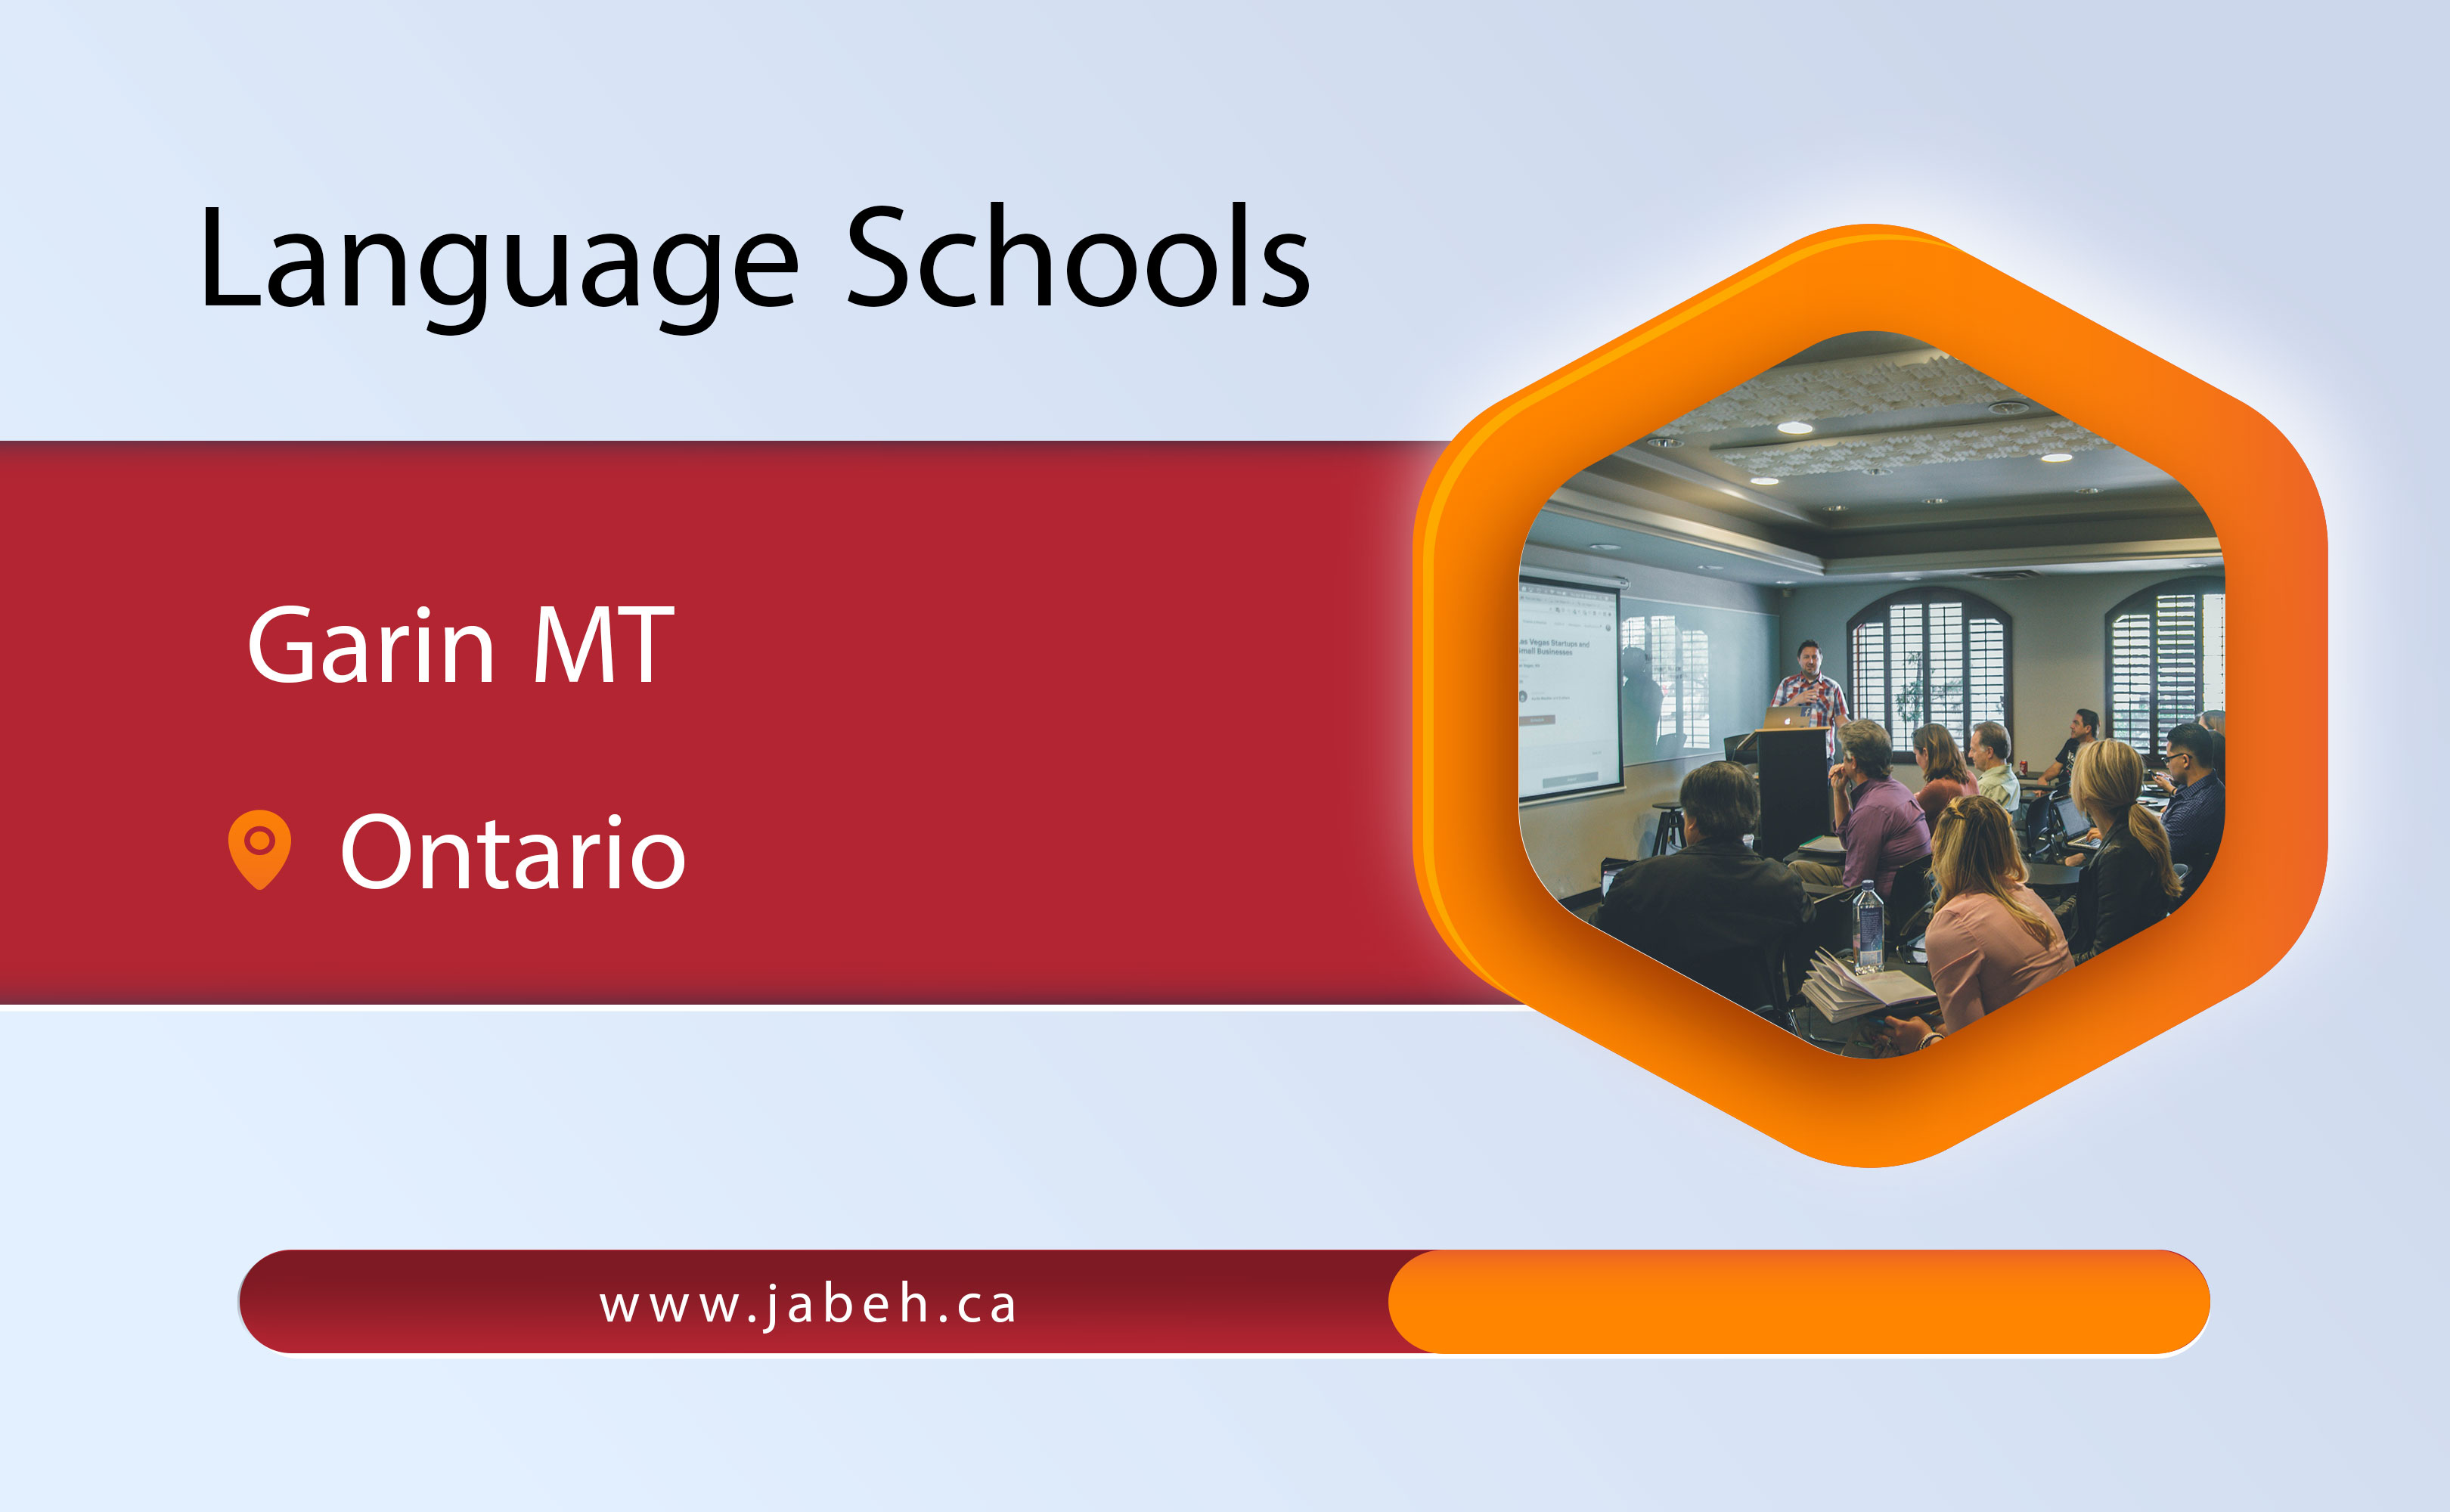 Garin MT Language School in Ontario